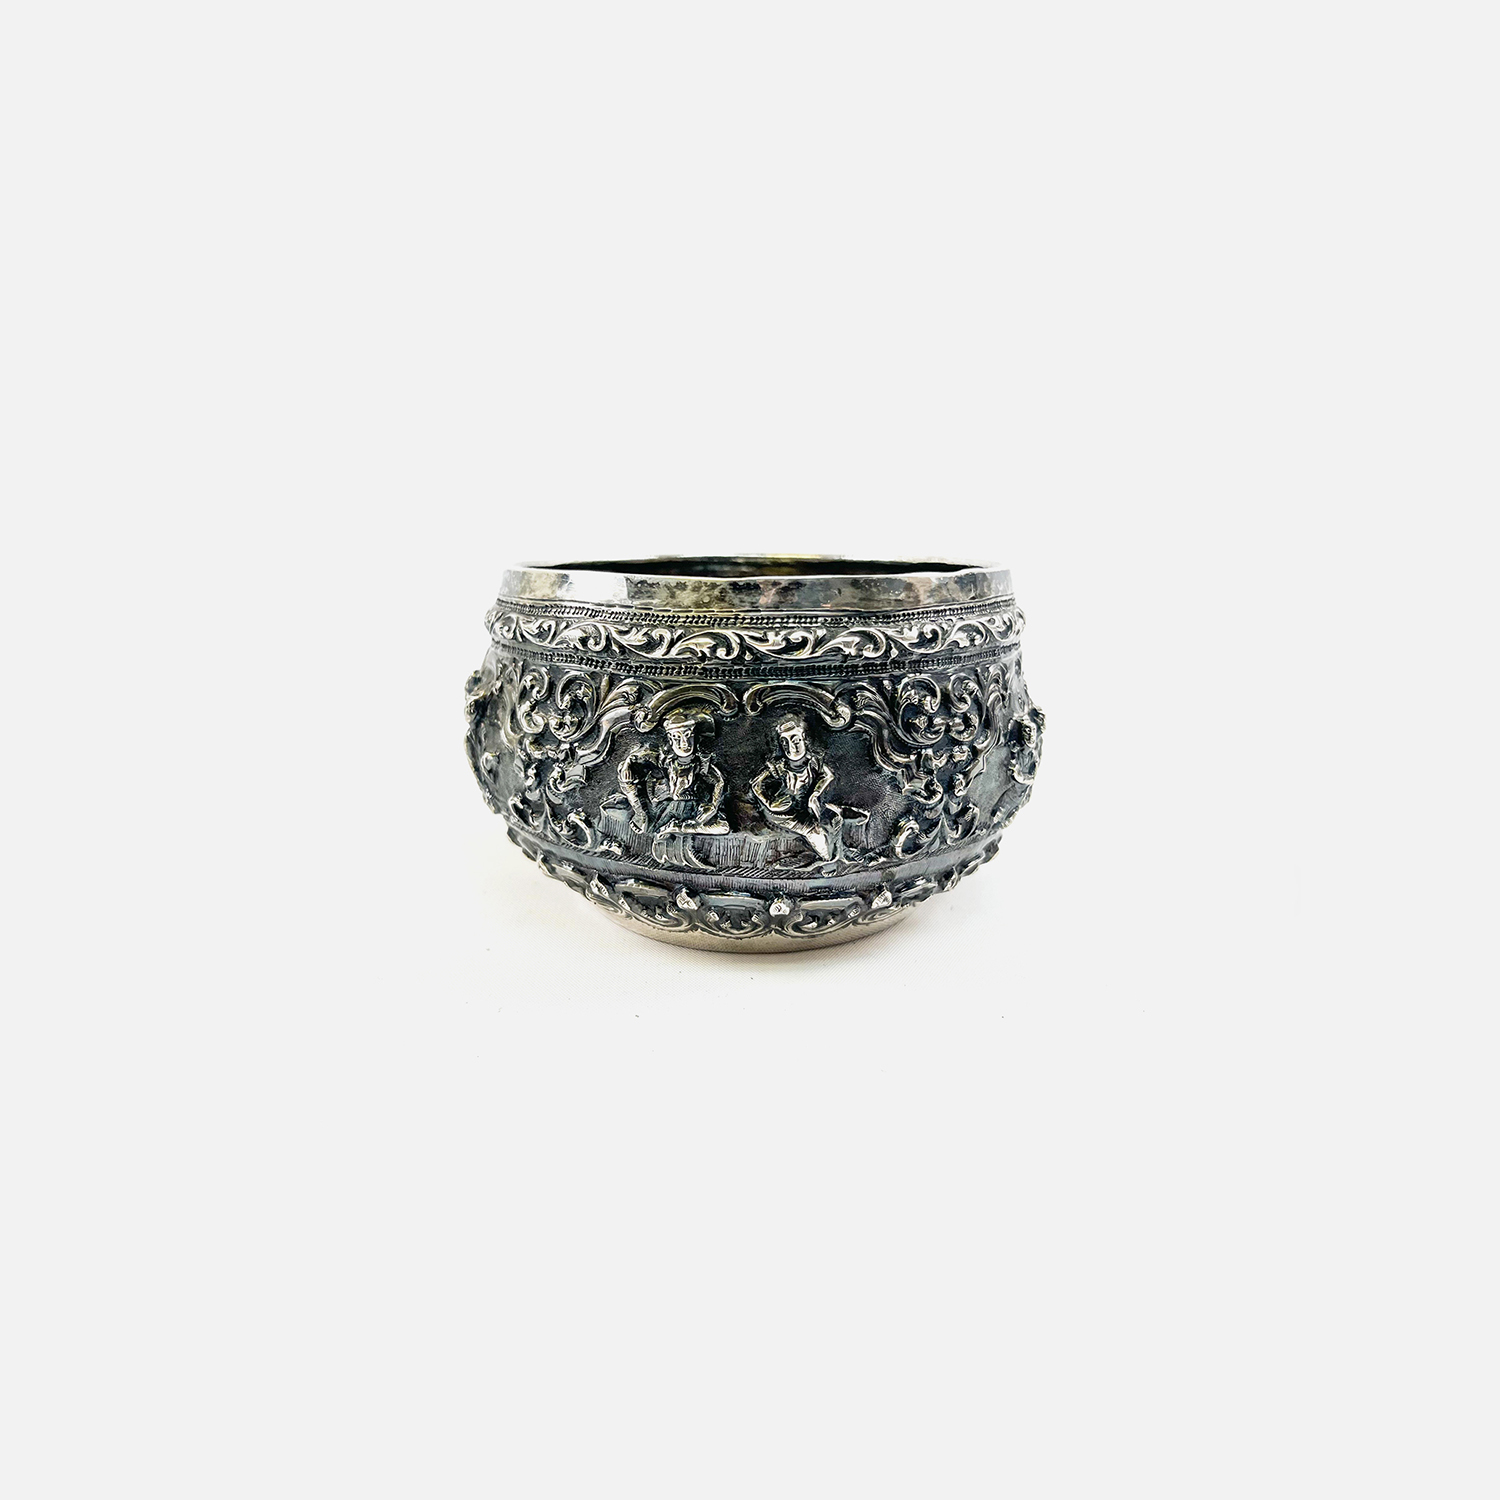 Antique Persian silver bowl